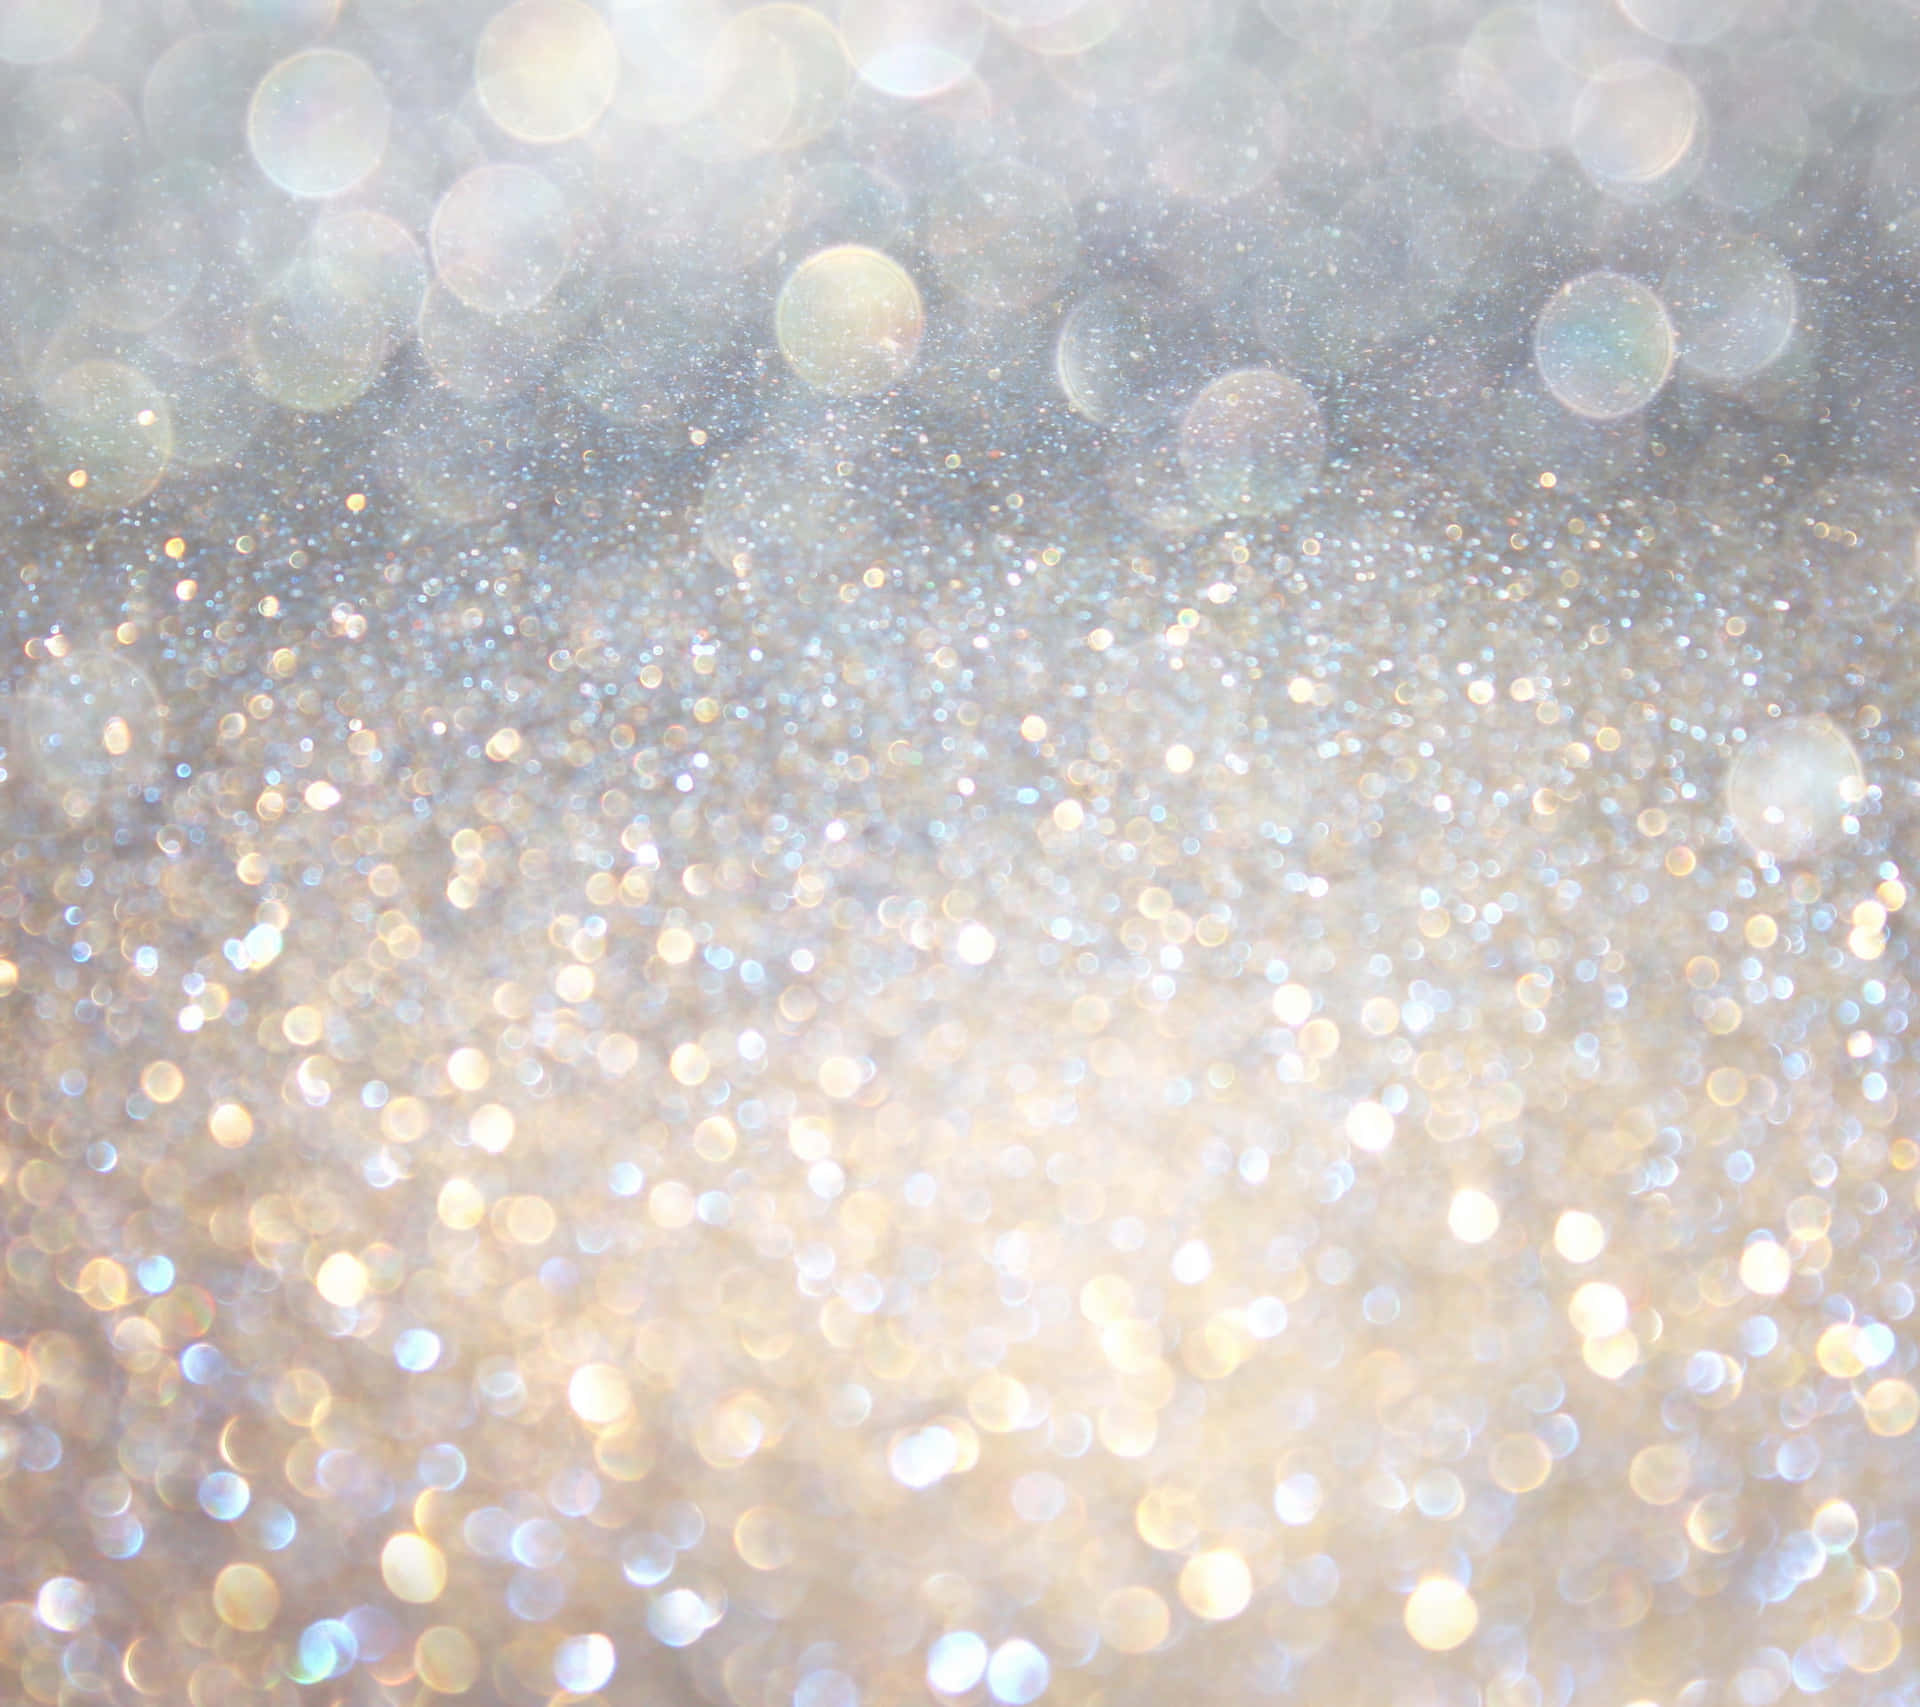 100+] Sparkle Silver Glitter Backgrounds